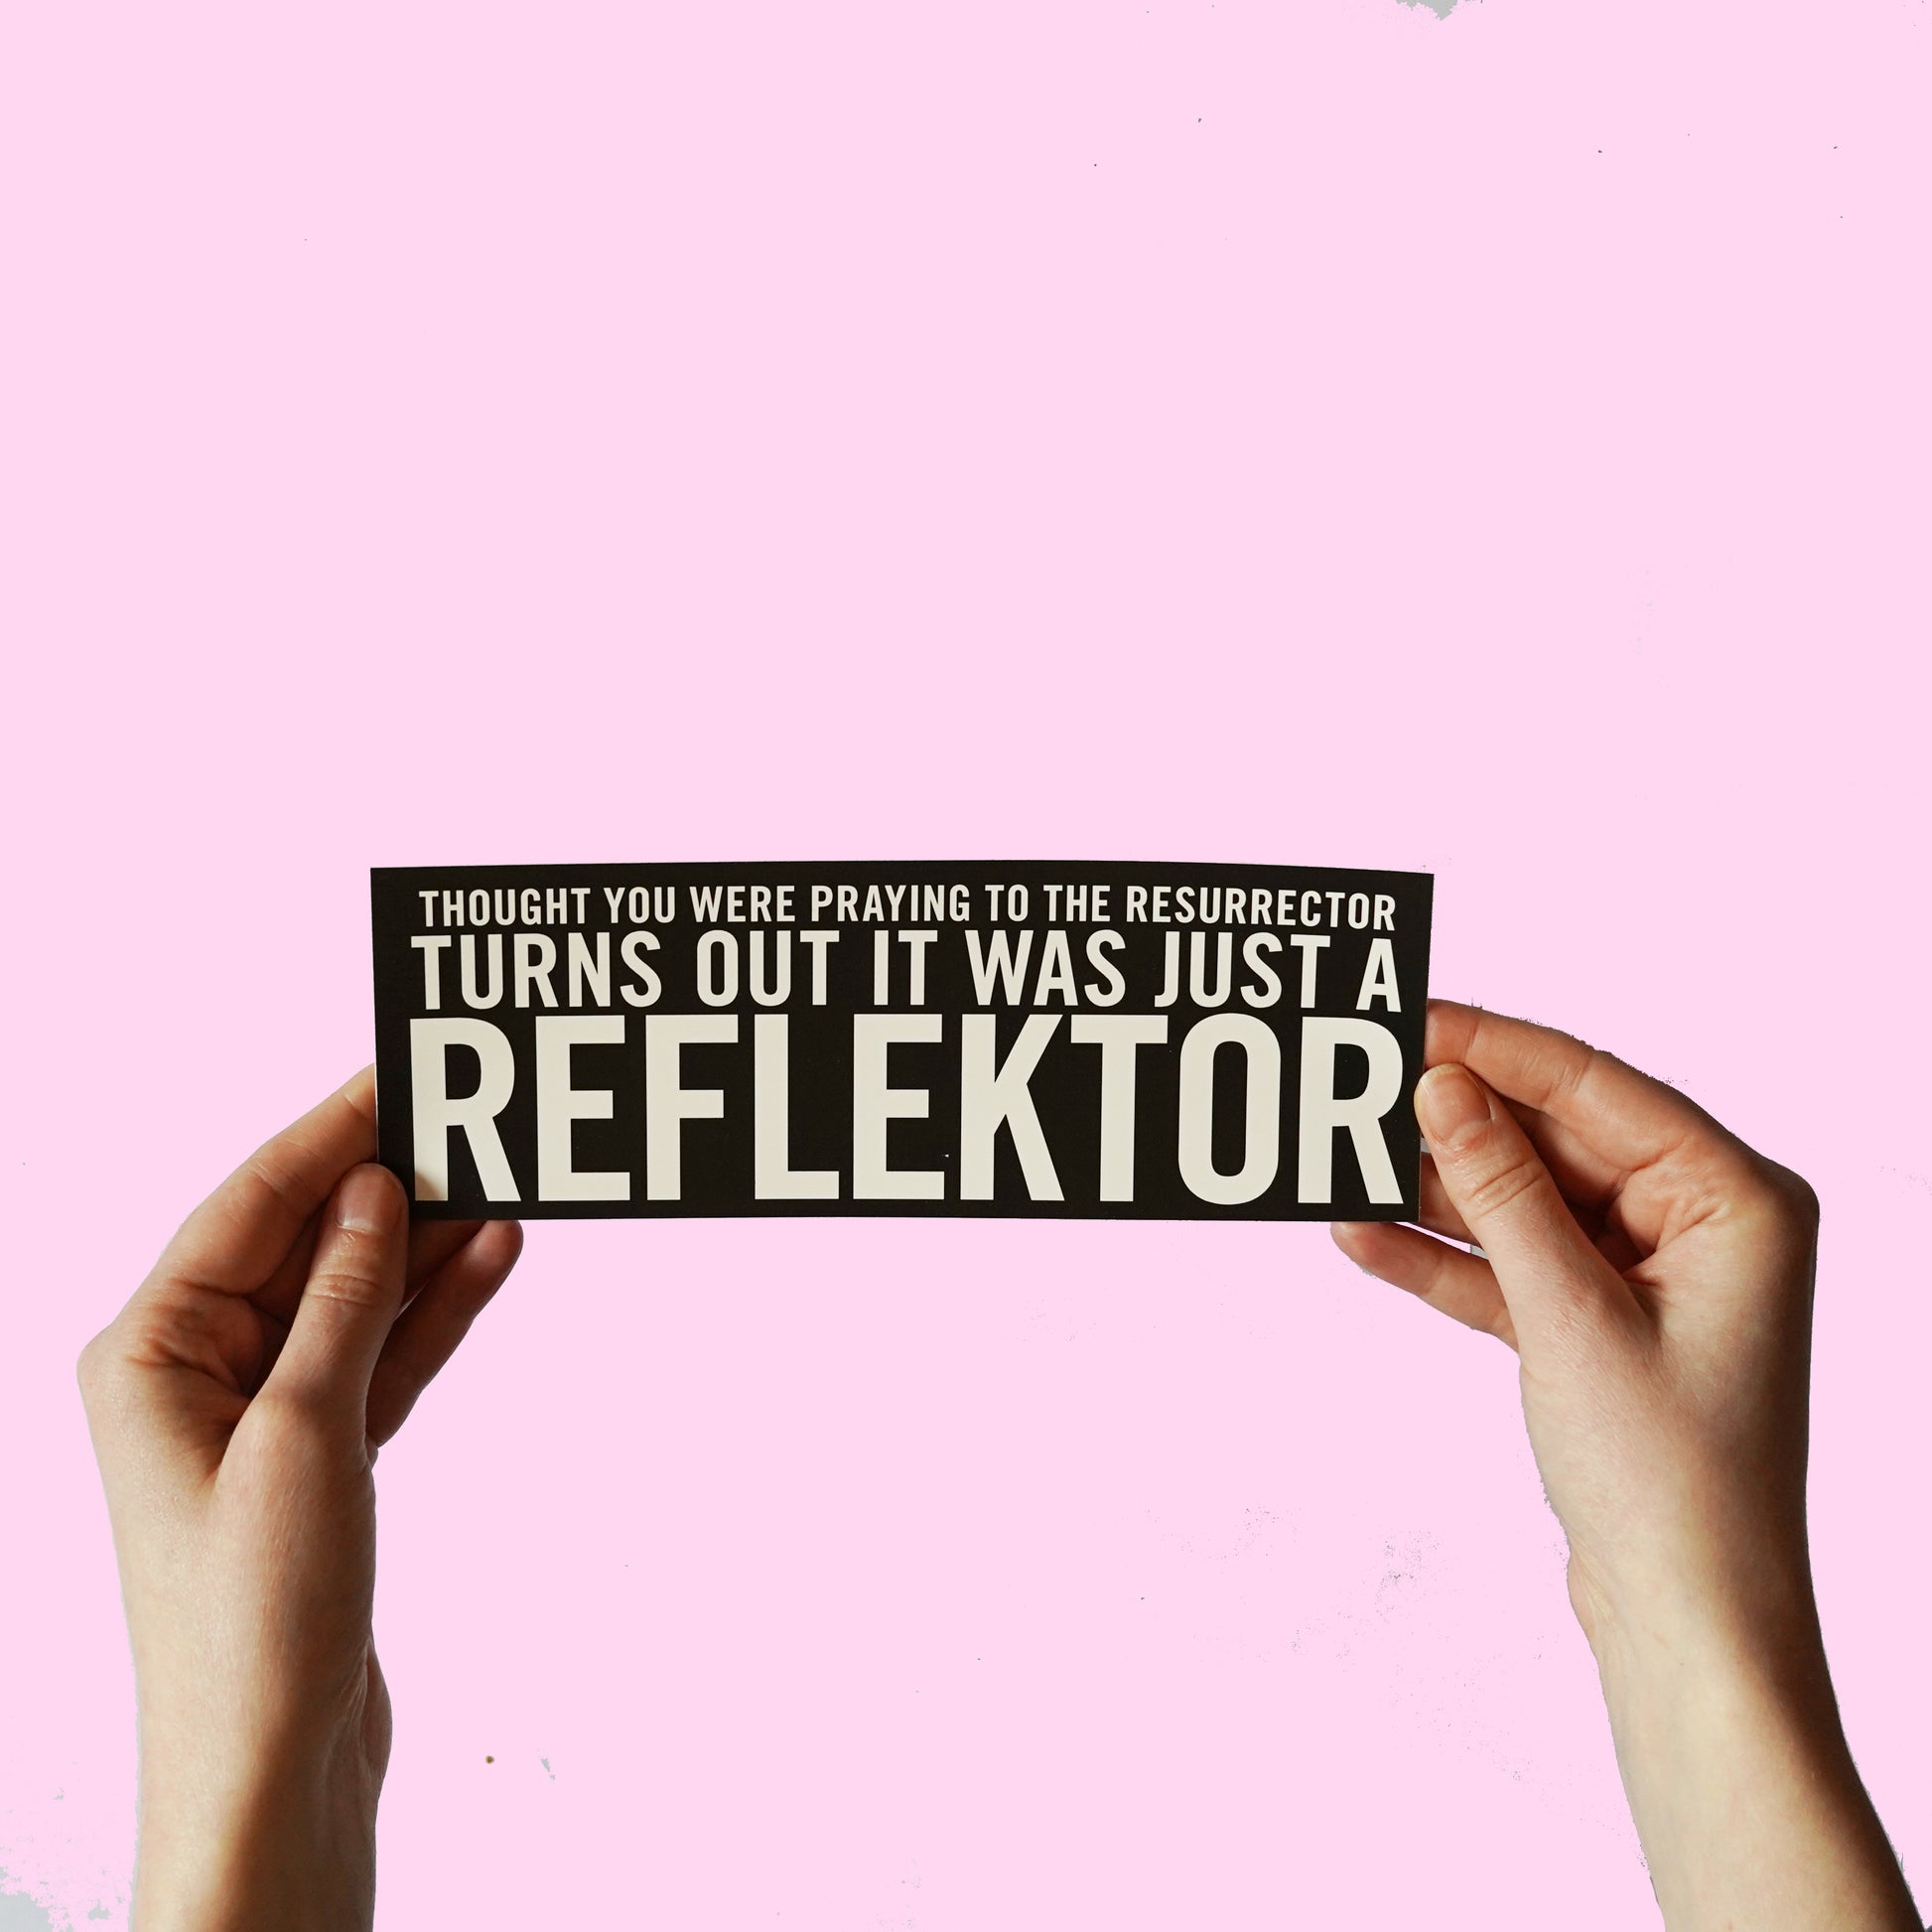 Arcade Fire "Reflektor" Sticker